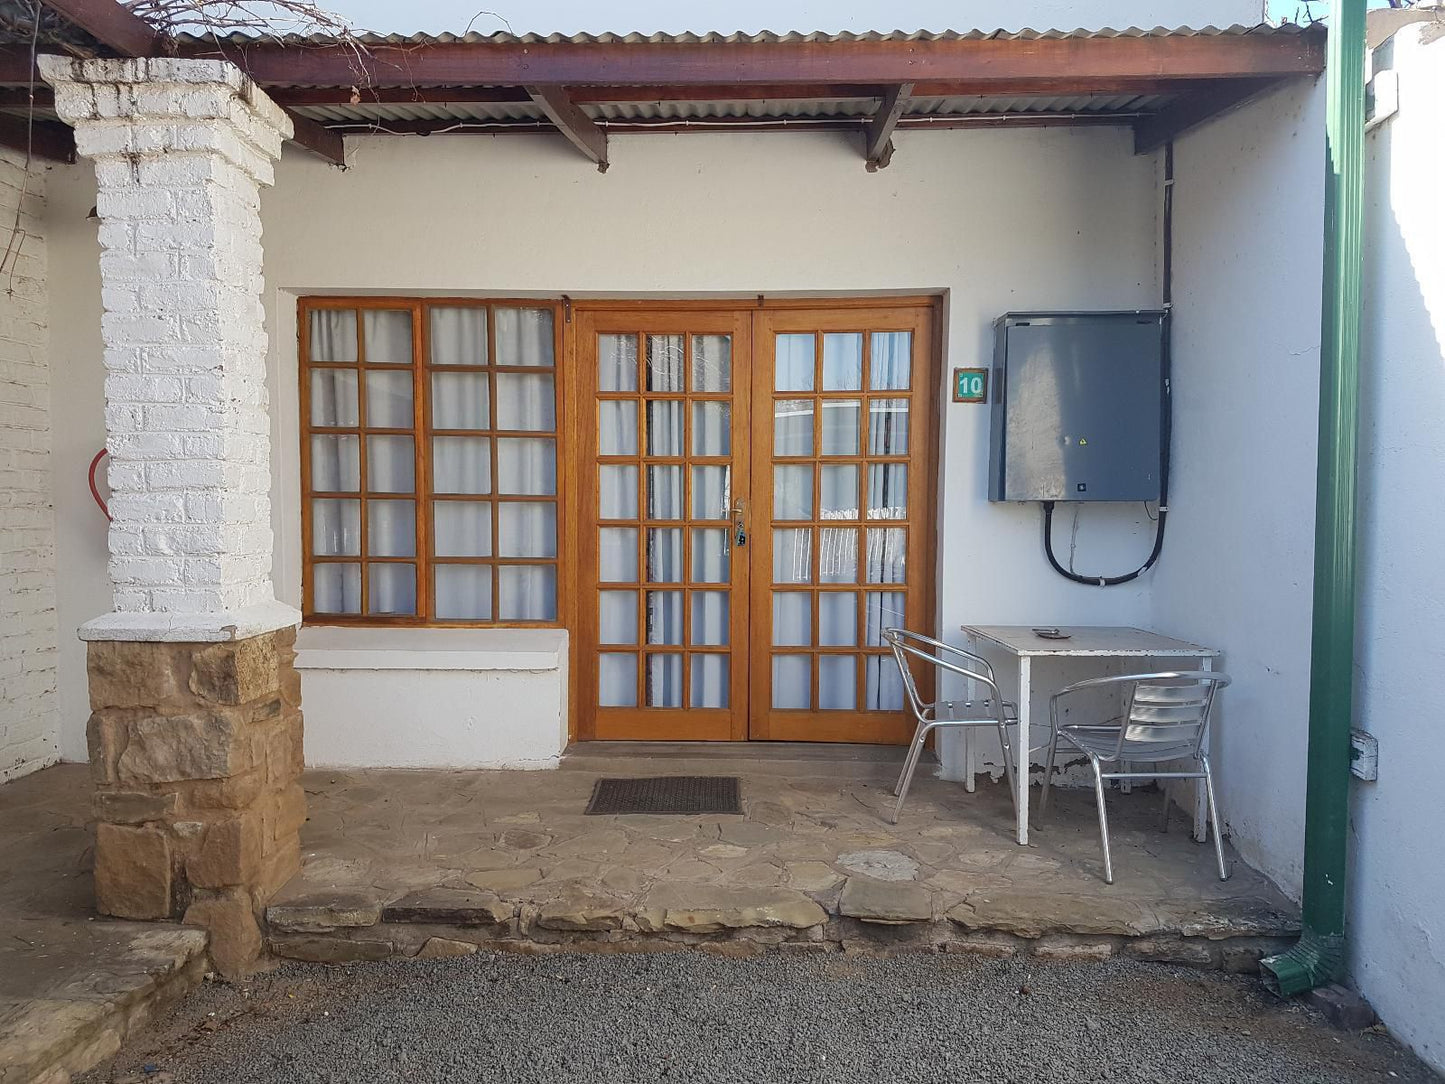 Crane Cottage Colesberg Northern Cape South Africa Door, Architecture